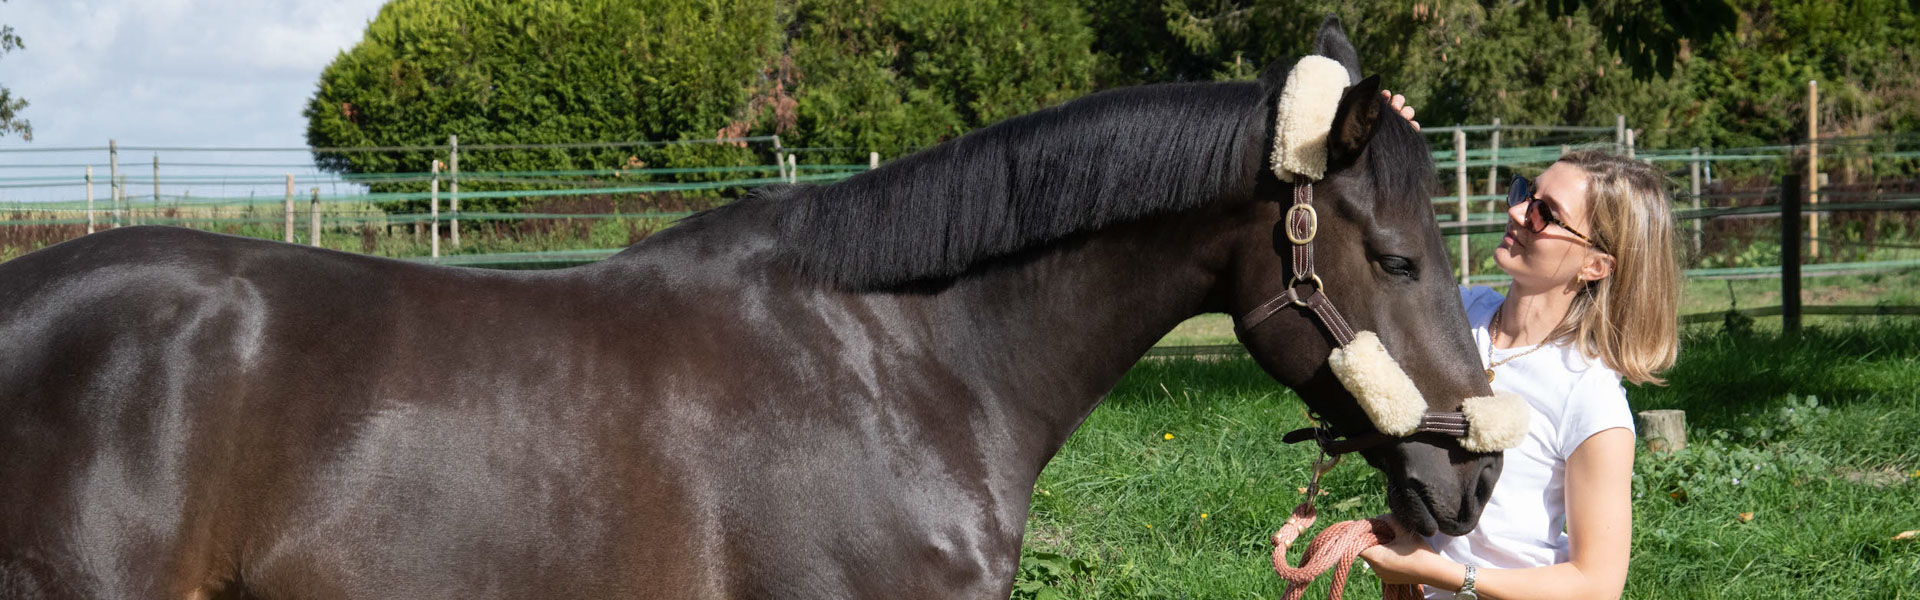 entretenir couper brosser crinière cheval equitation poil